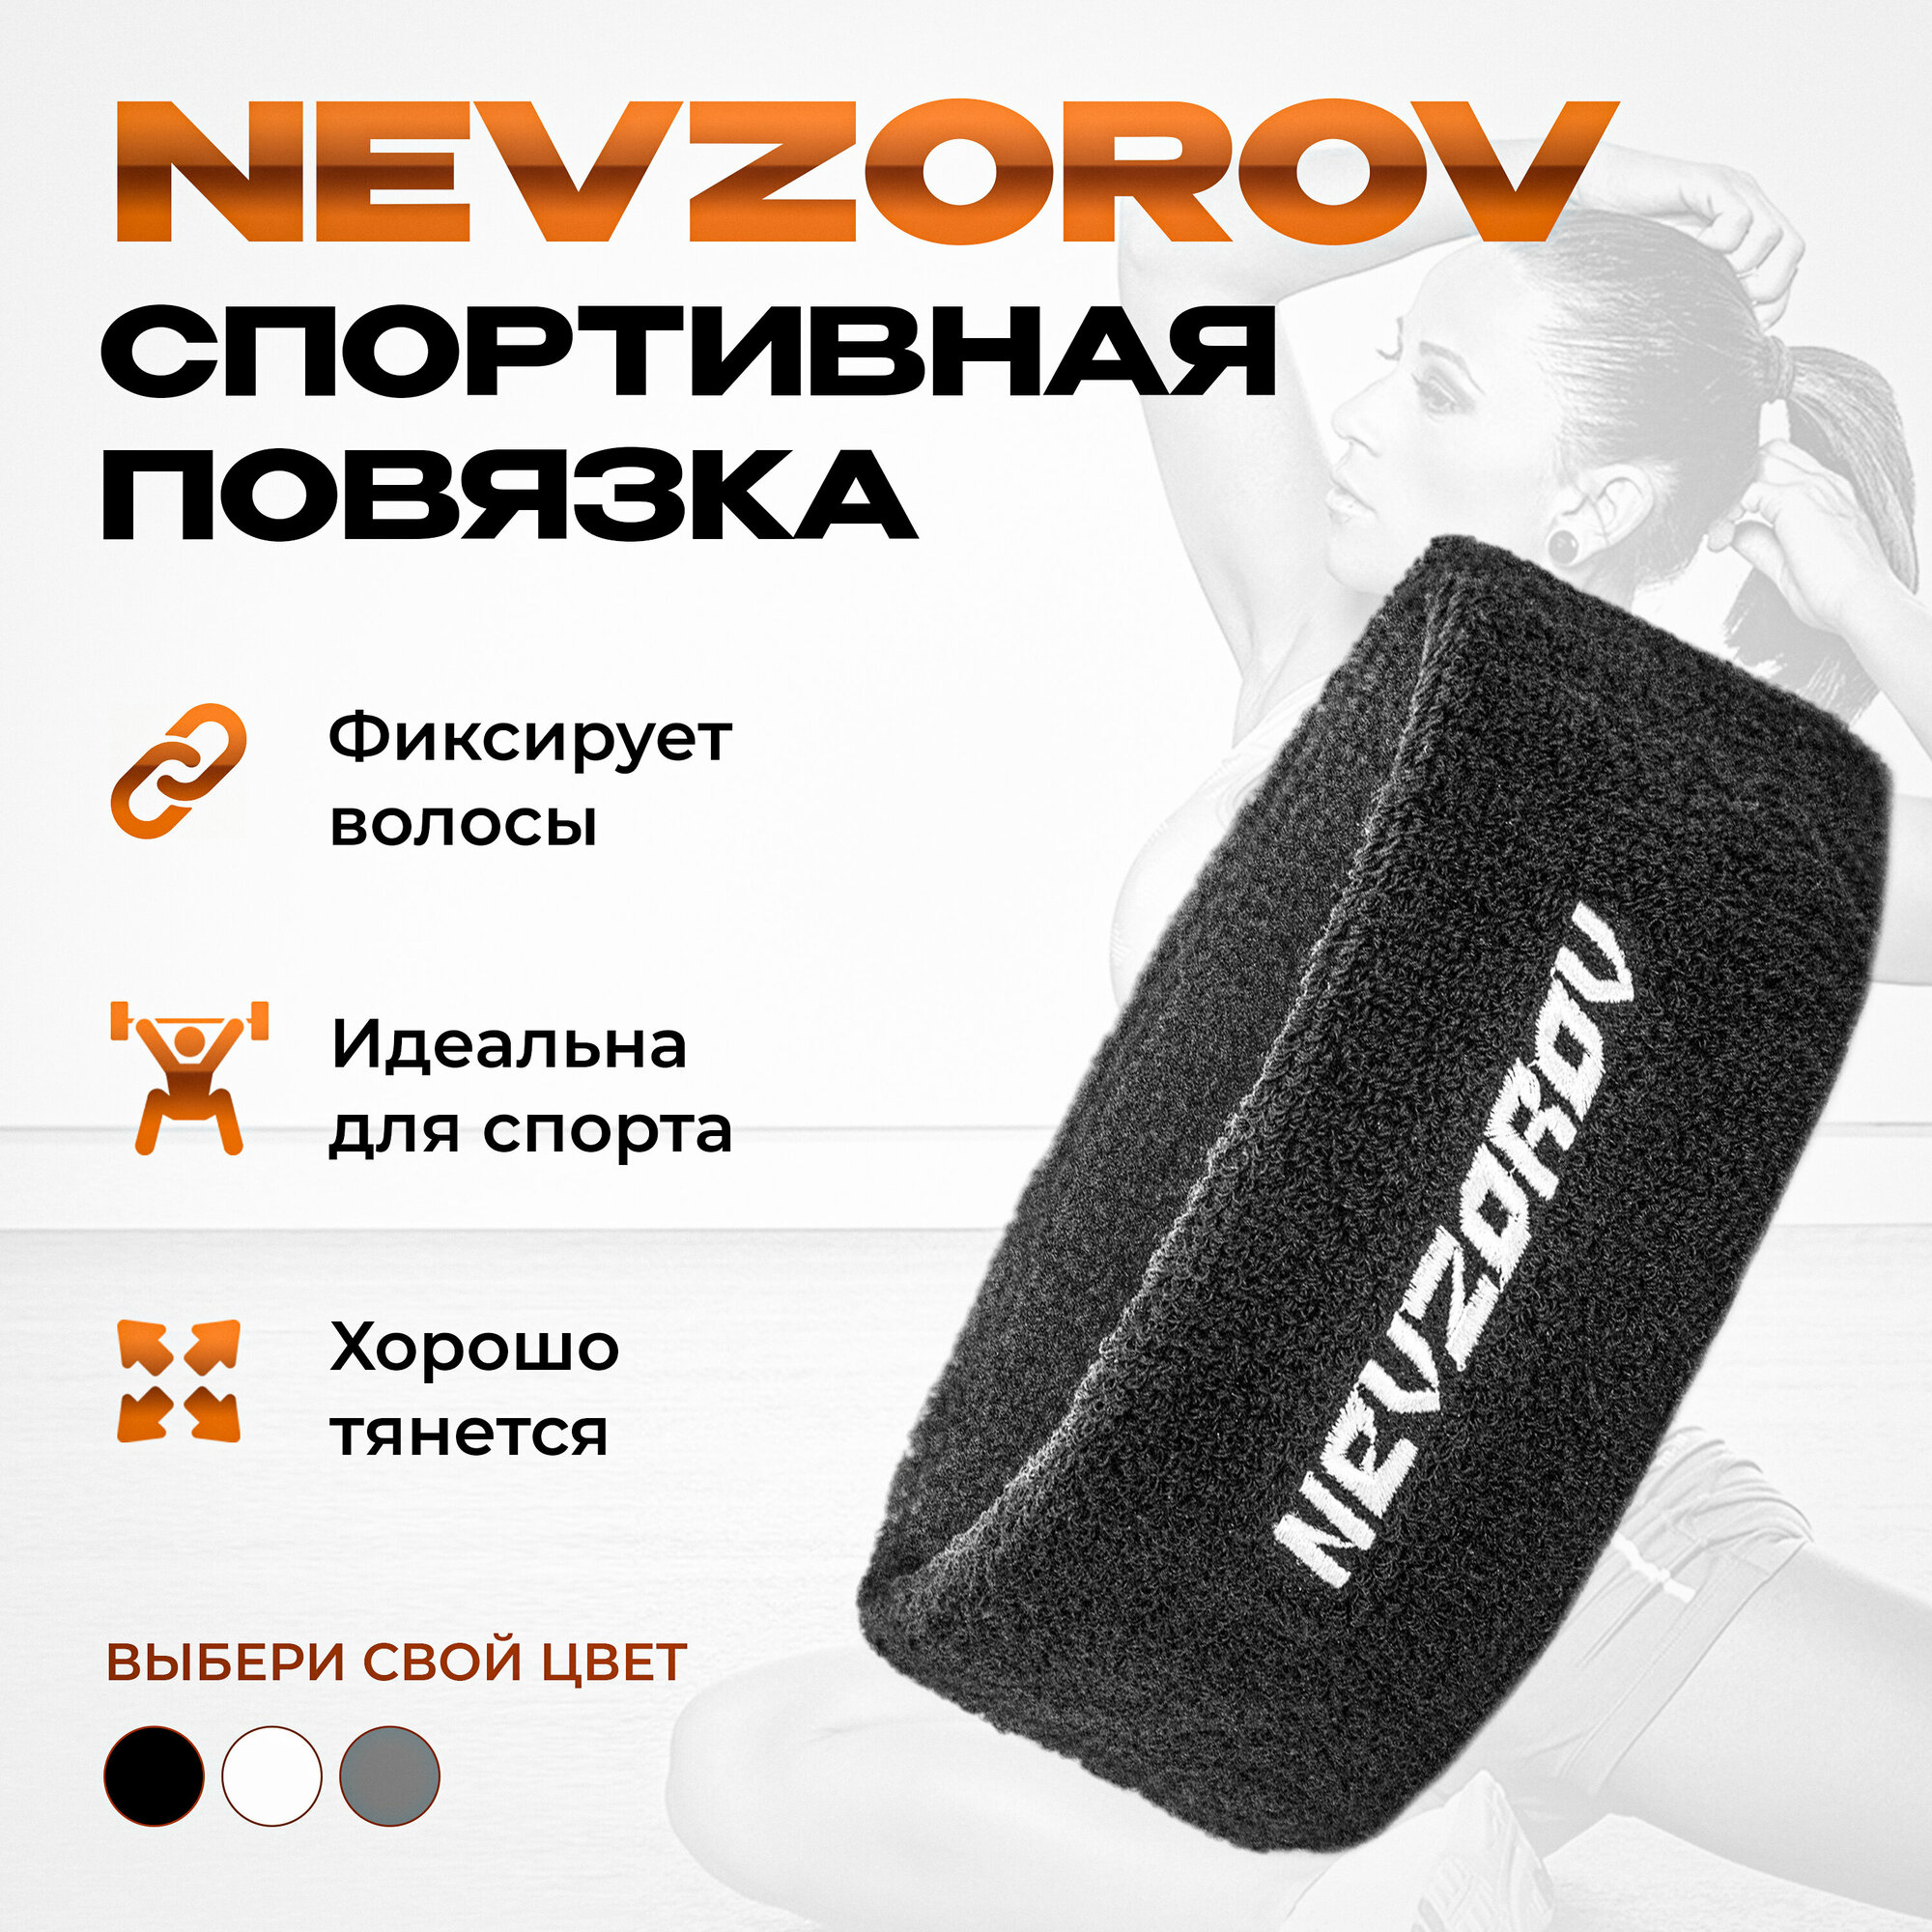 Спортивная повязка на голову Nevzorov Team мужская женская